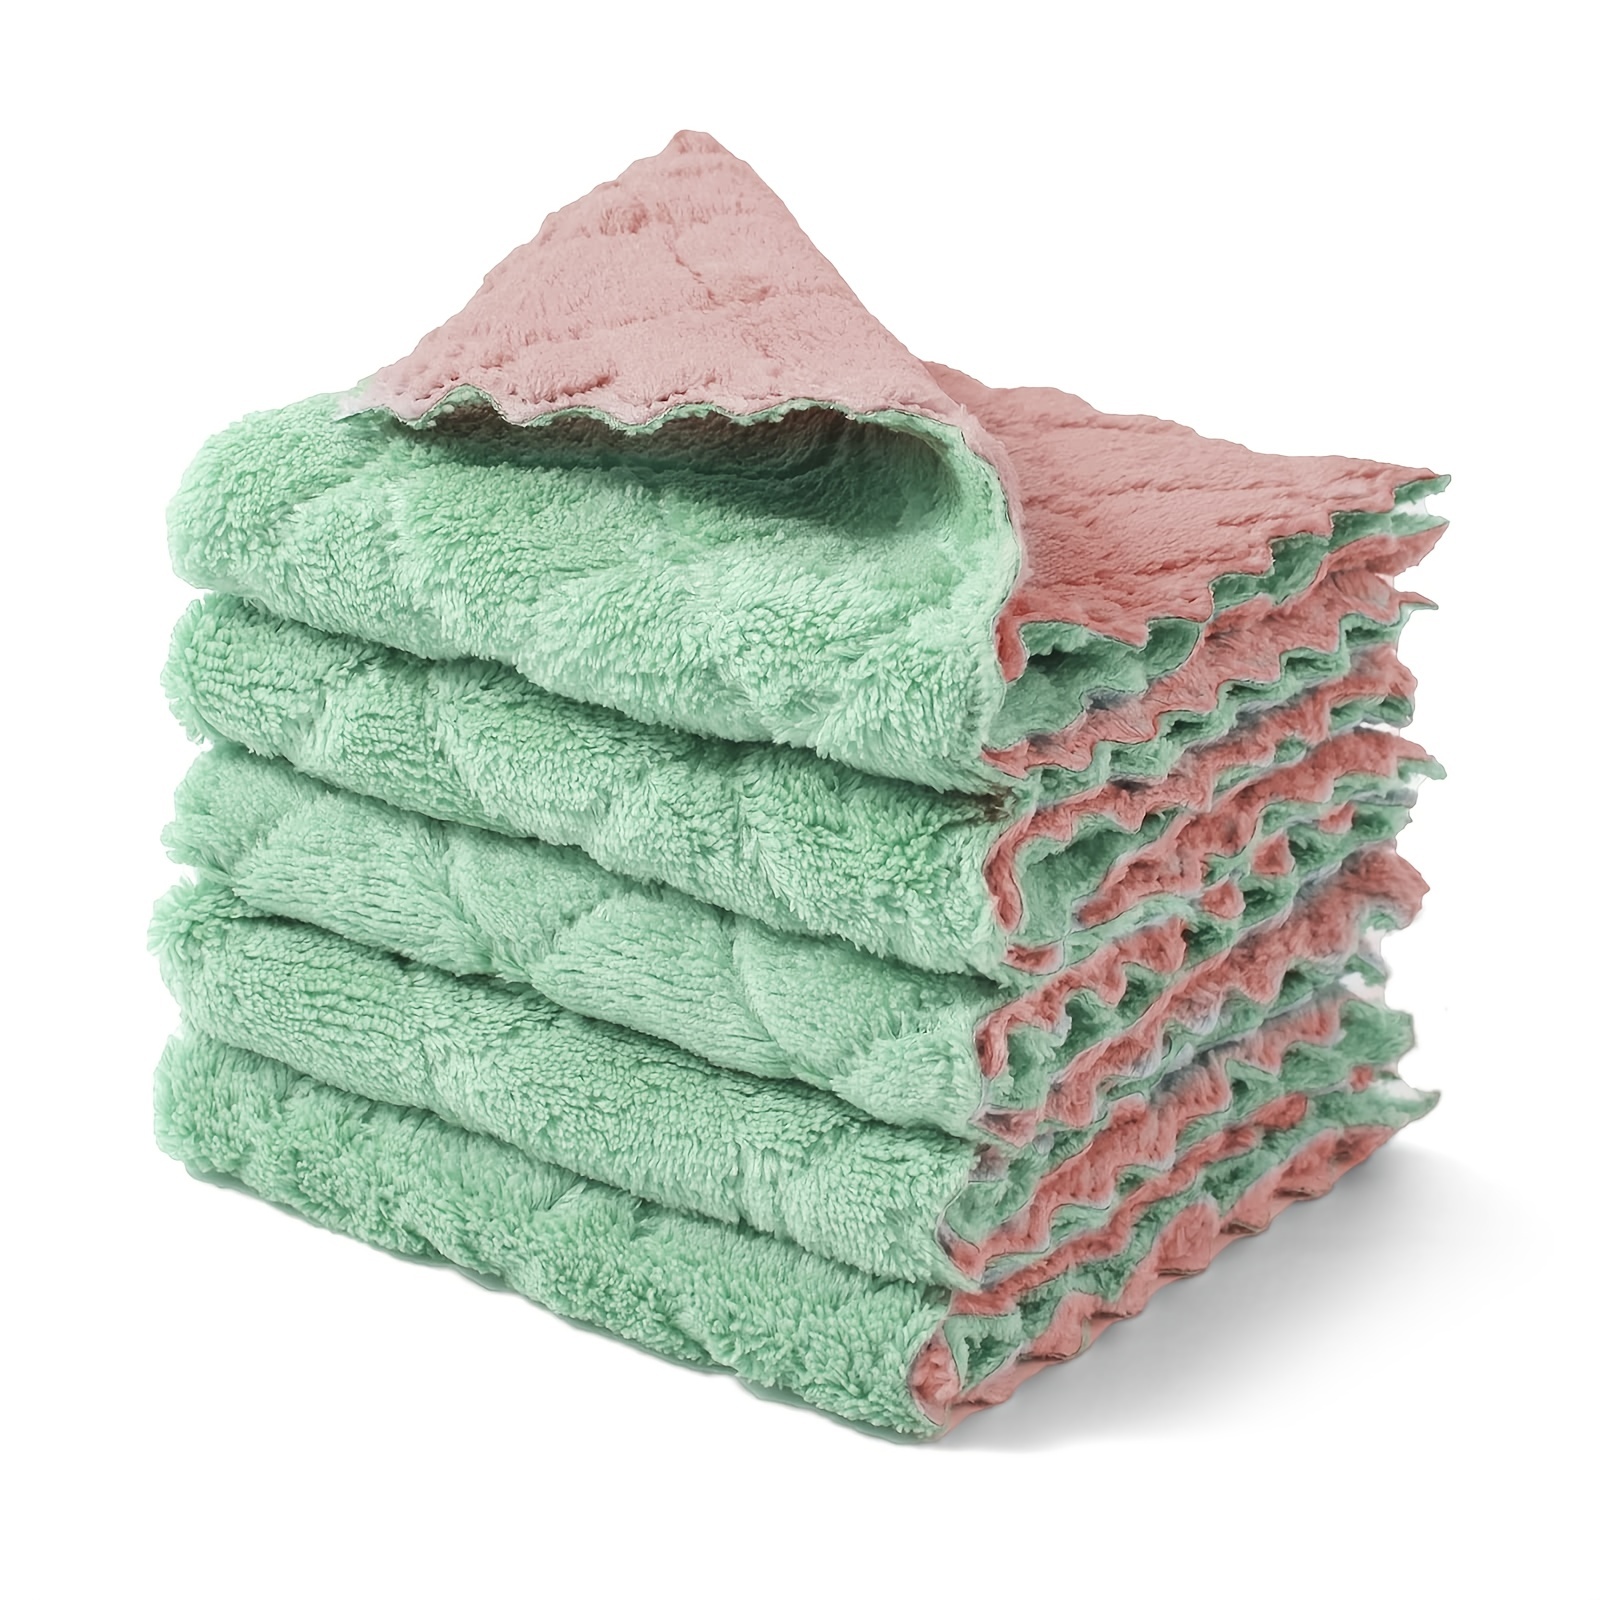 5packs 10packs Kitchen Cloth Dish Towels - Premium Dishcloths - Super Absorbent - Coral Velvet Dishtowels - Nonstick Oil Washable - Fast Drying - Shop Now